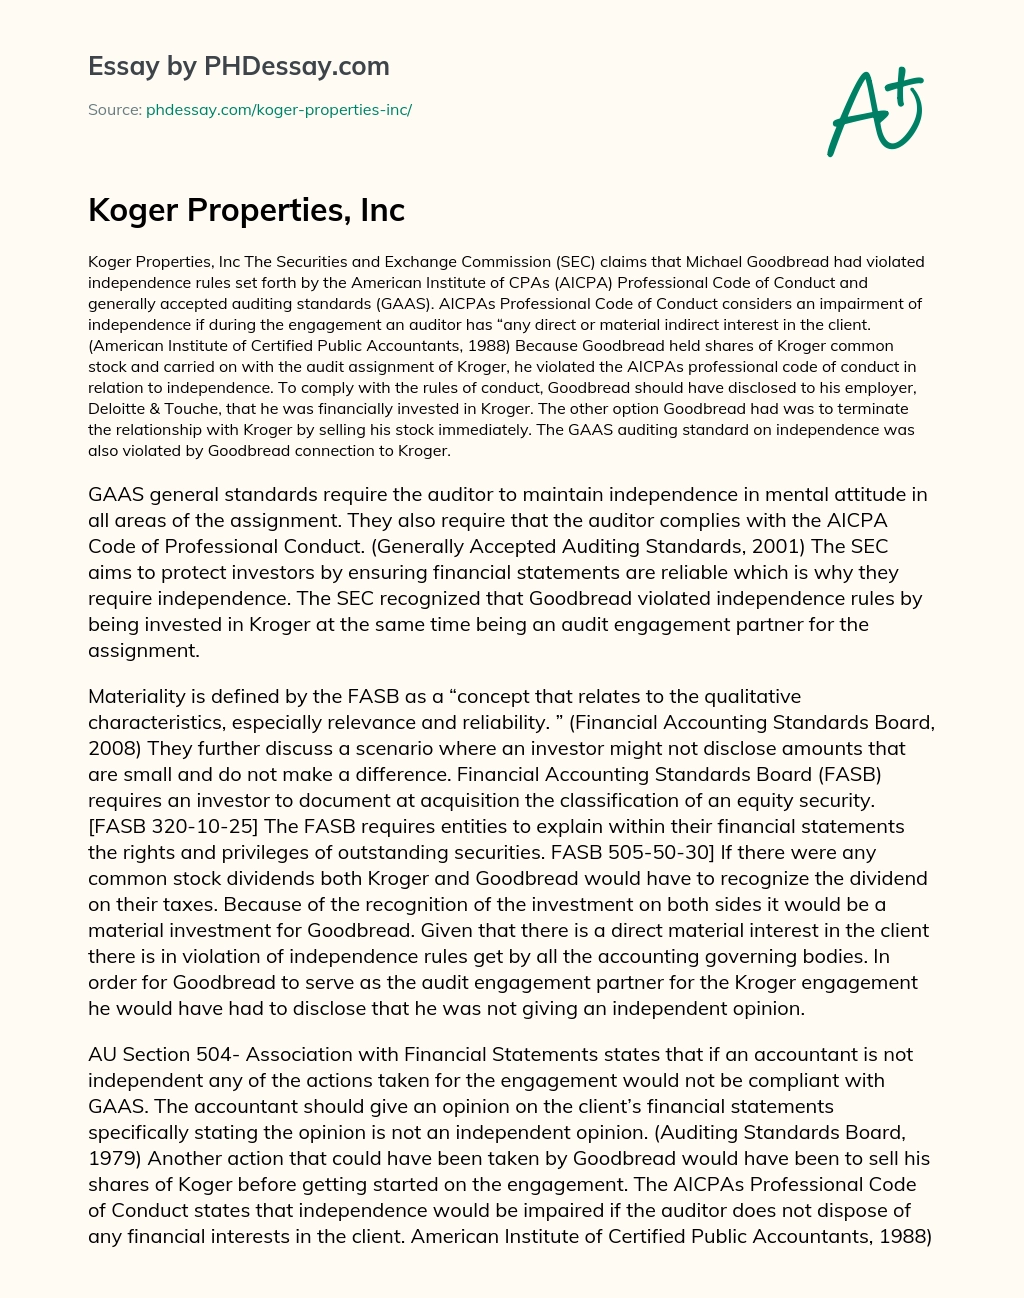 Koger Properties, Inc essay